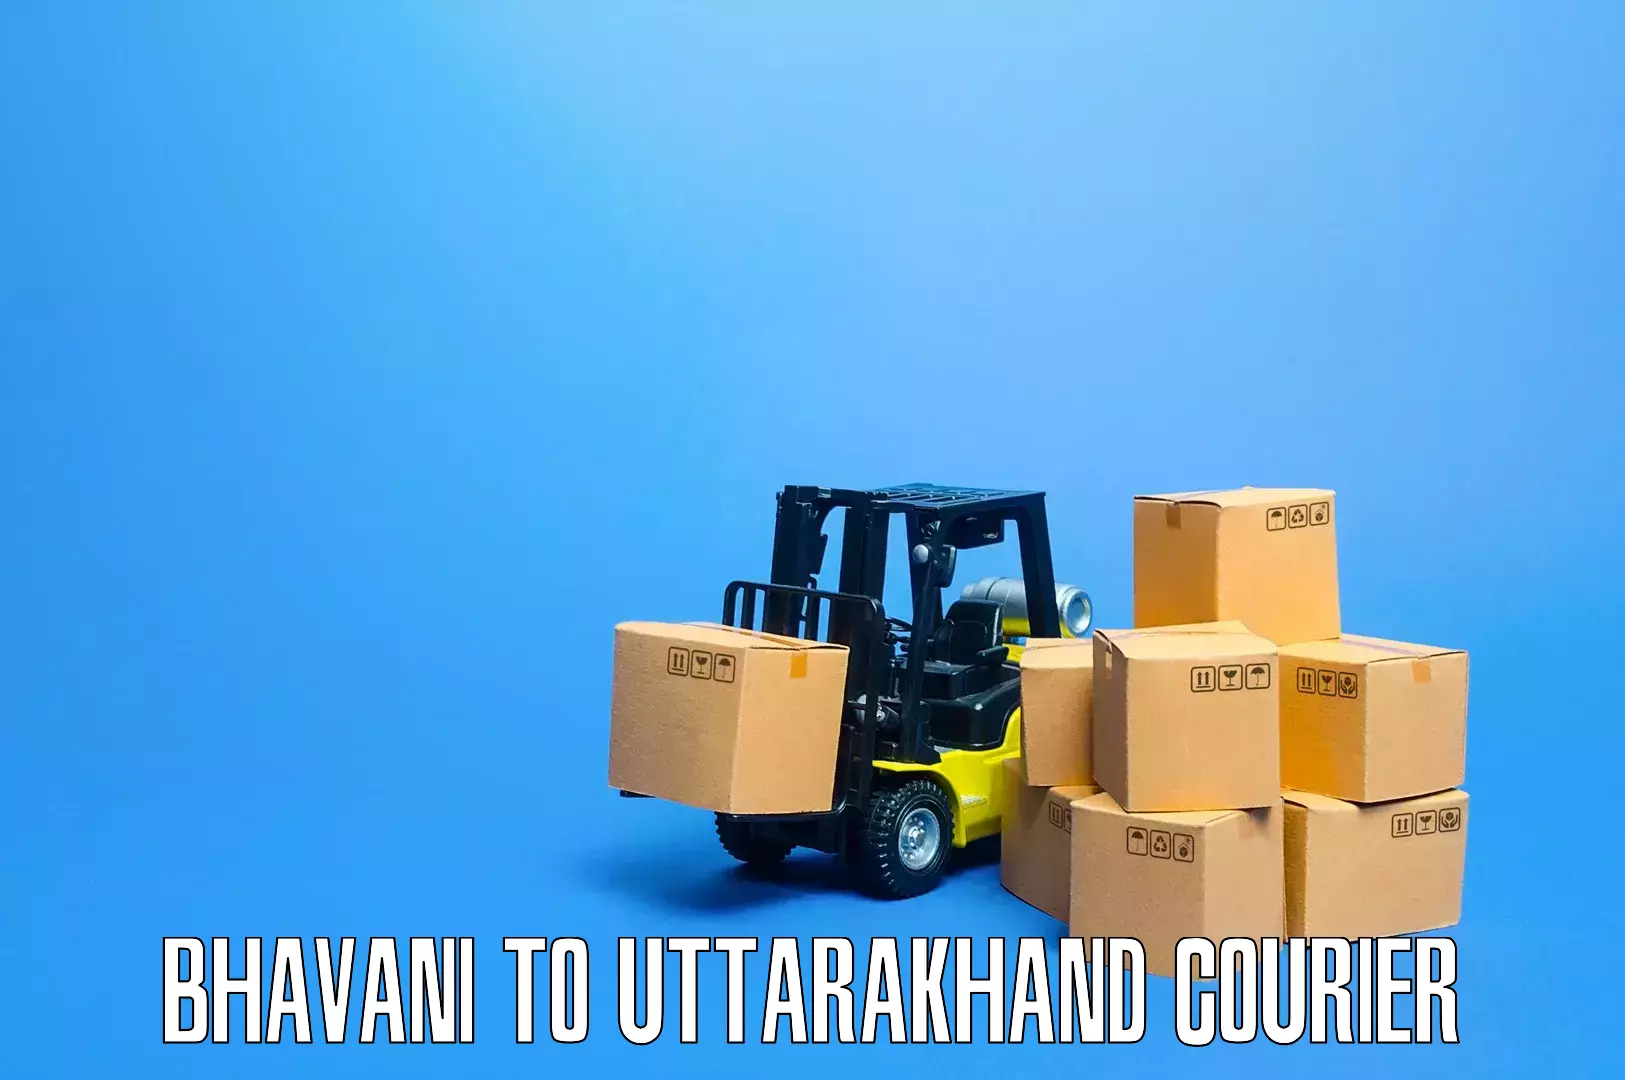 Furniture moving specialists Bhavani to Uttarakhand